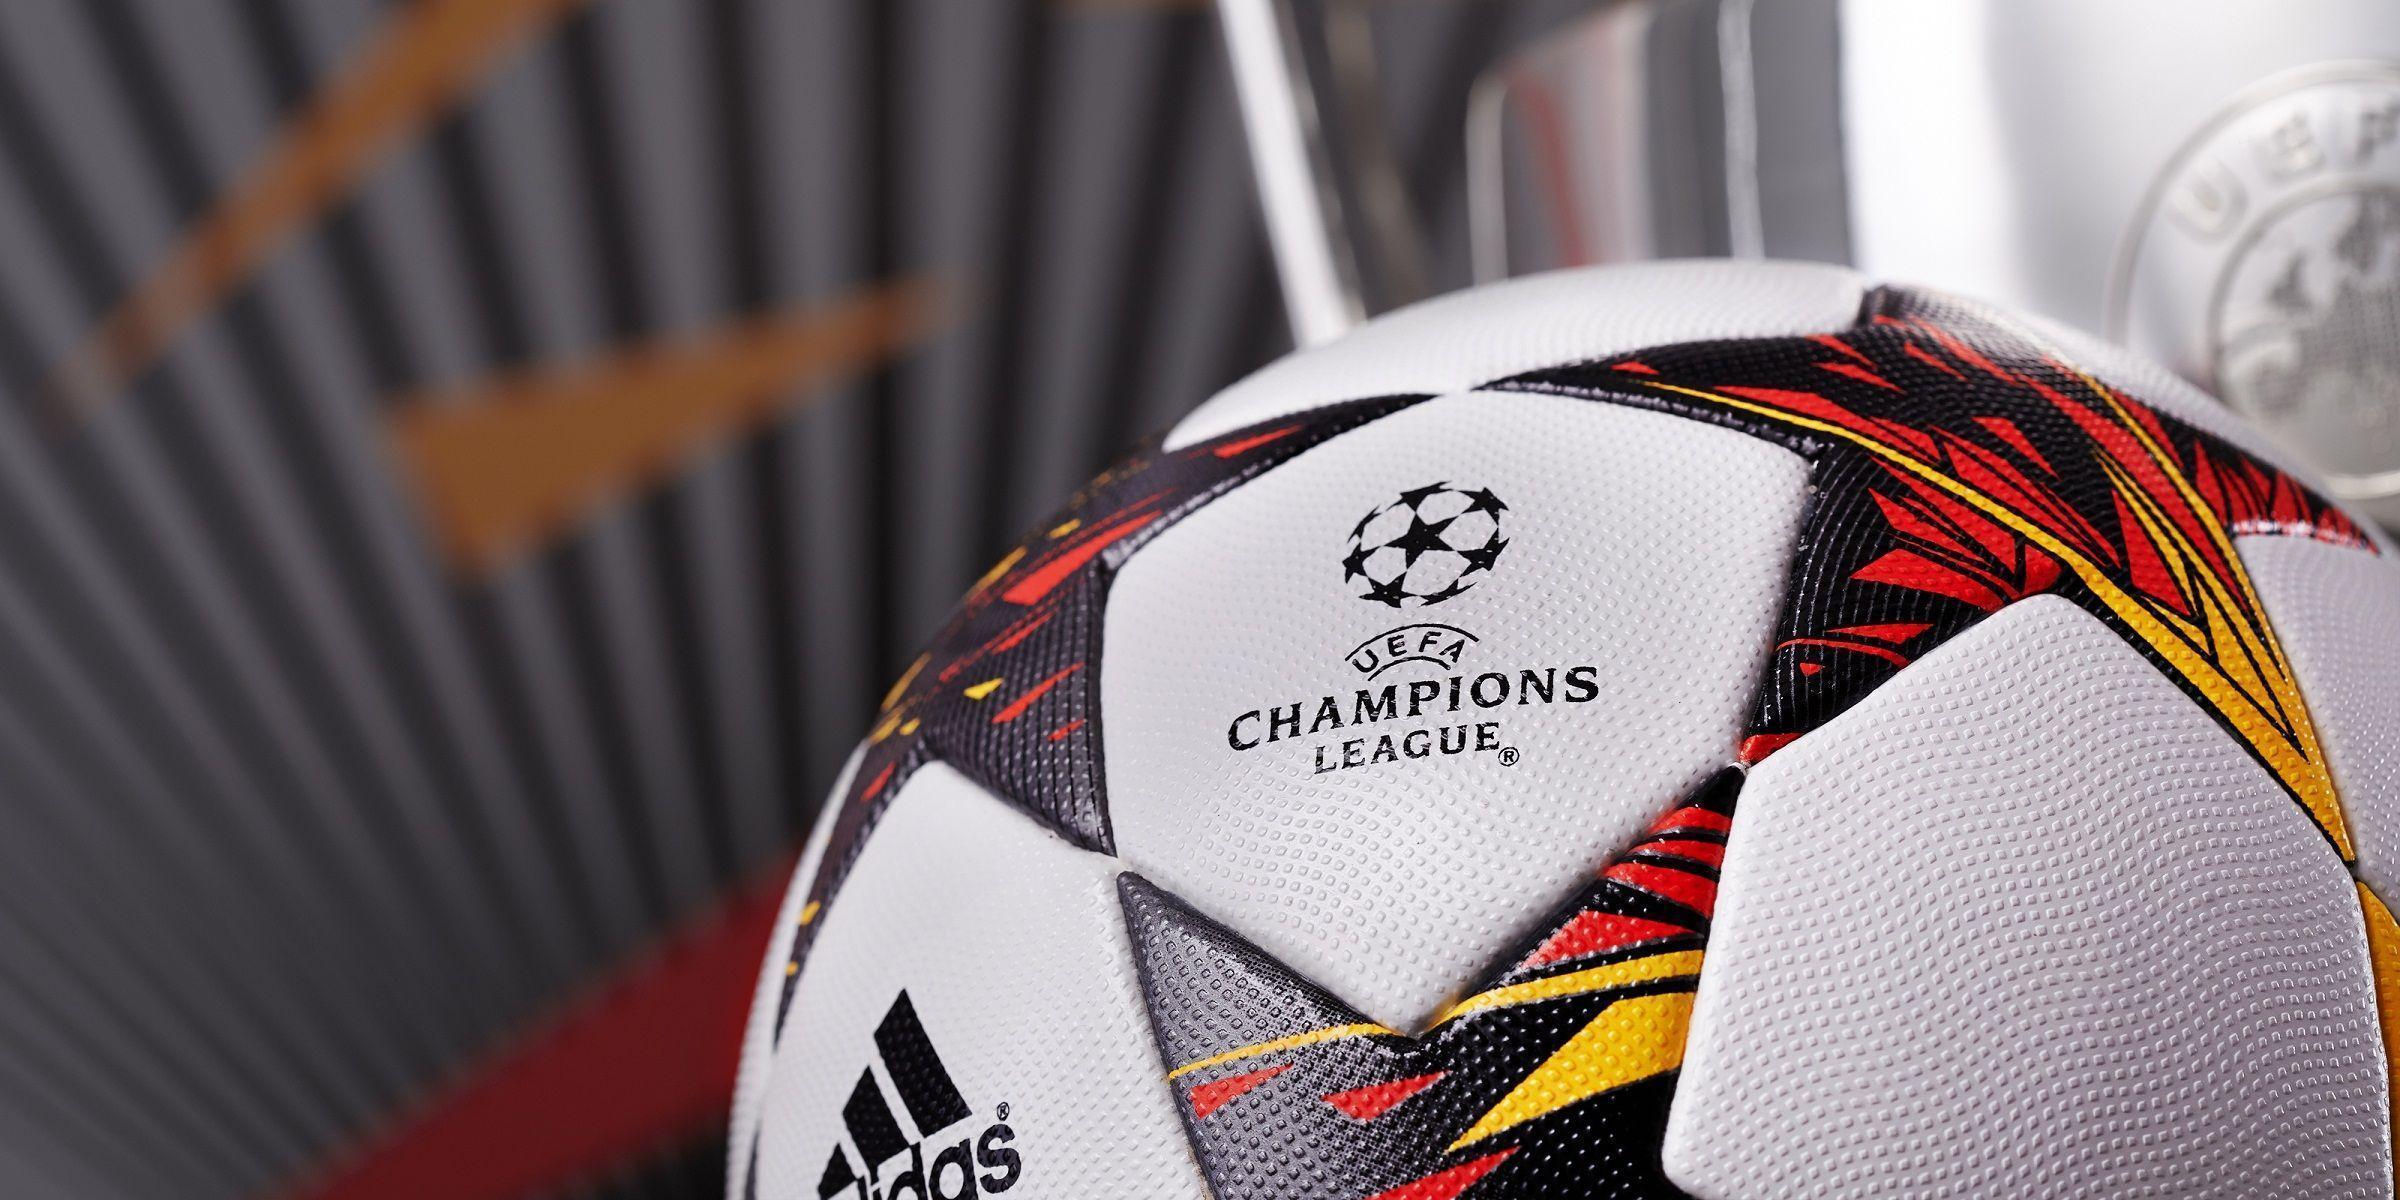 UEFA Champions League 2014 Ball